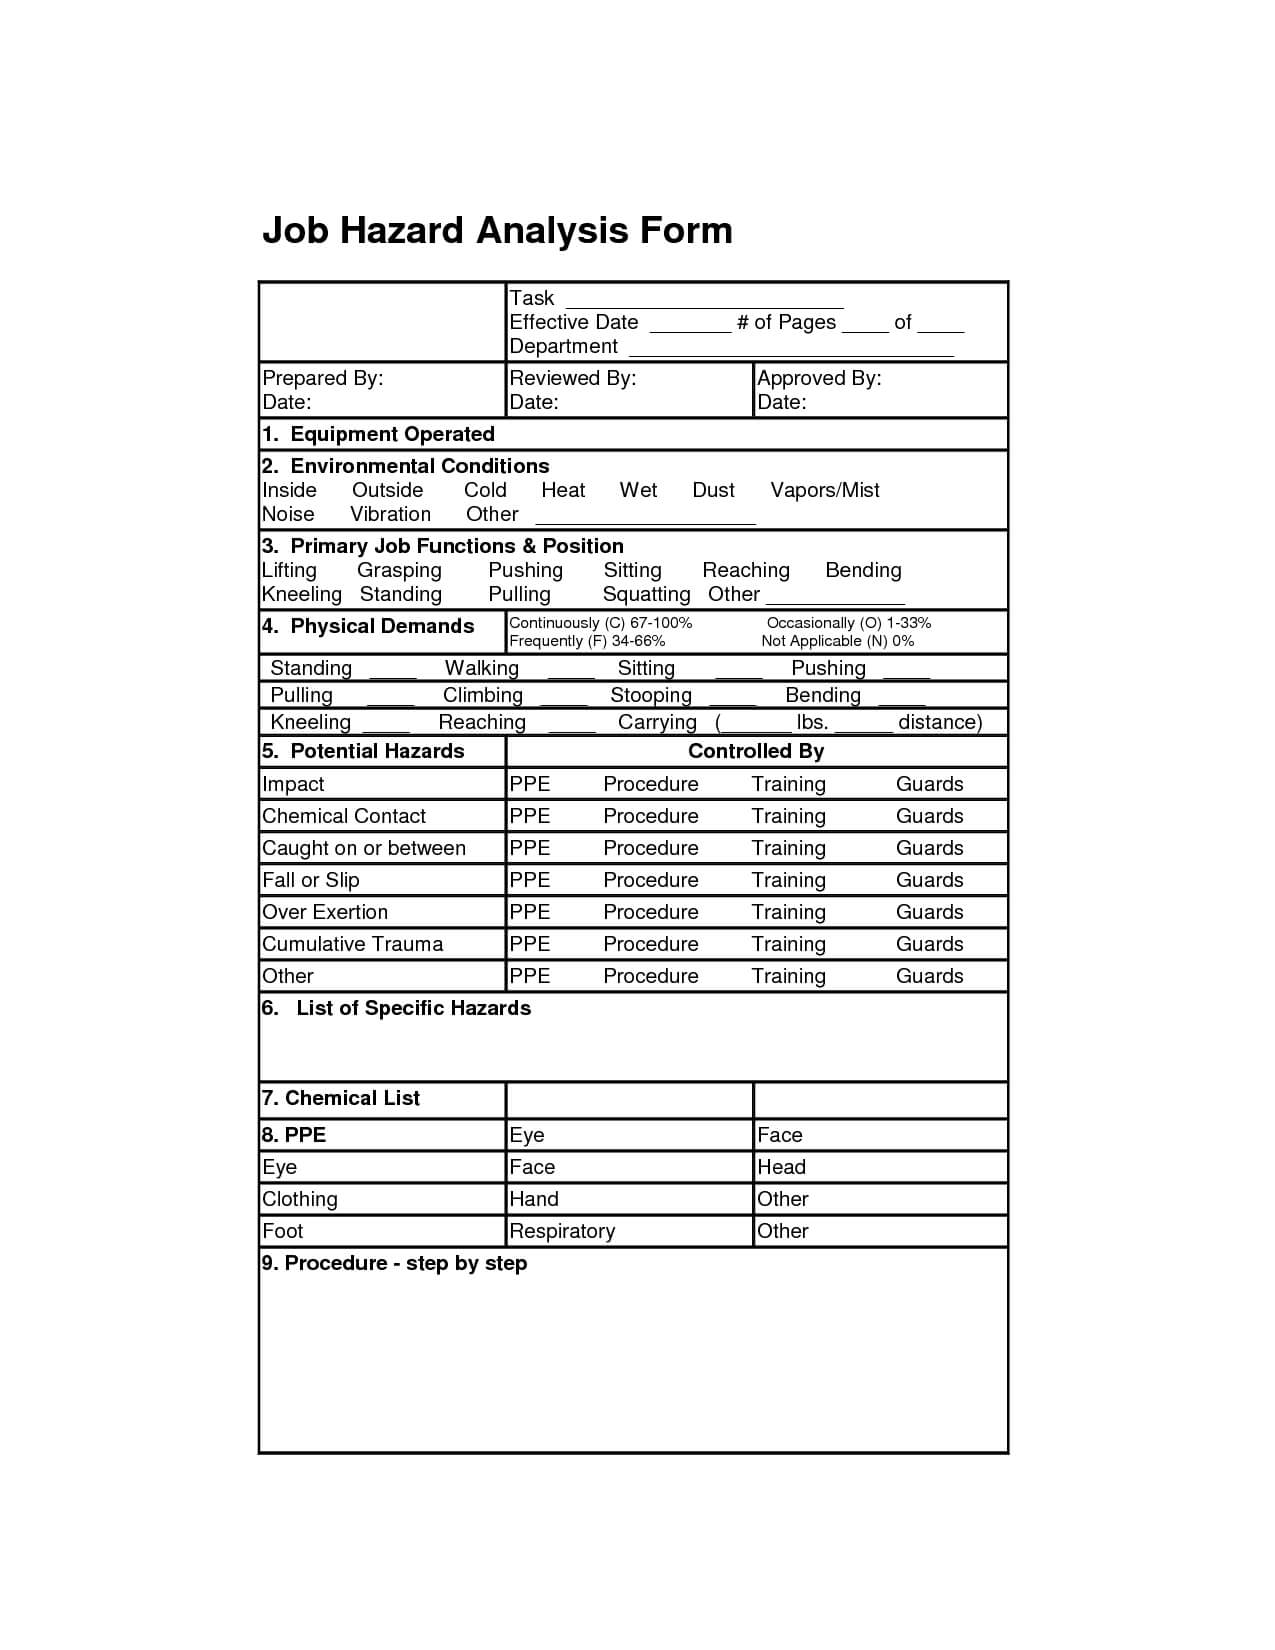 Job Hazard Analysis Form | Job Analysis, Site Analysis With Safety Analysis Report Template